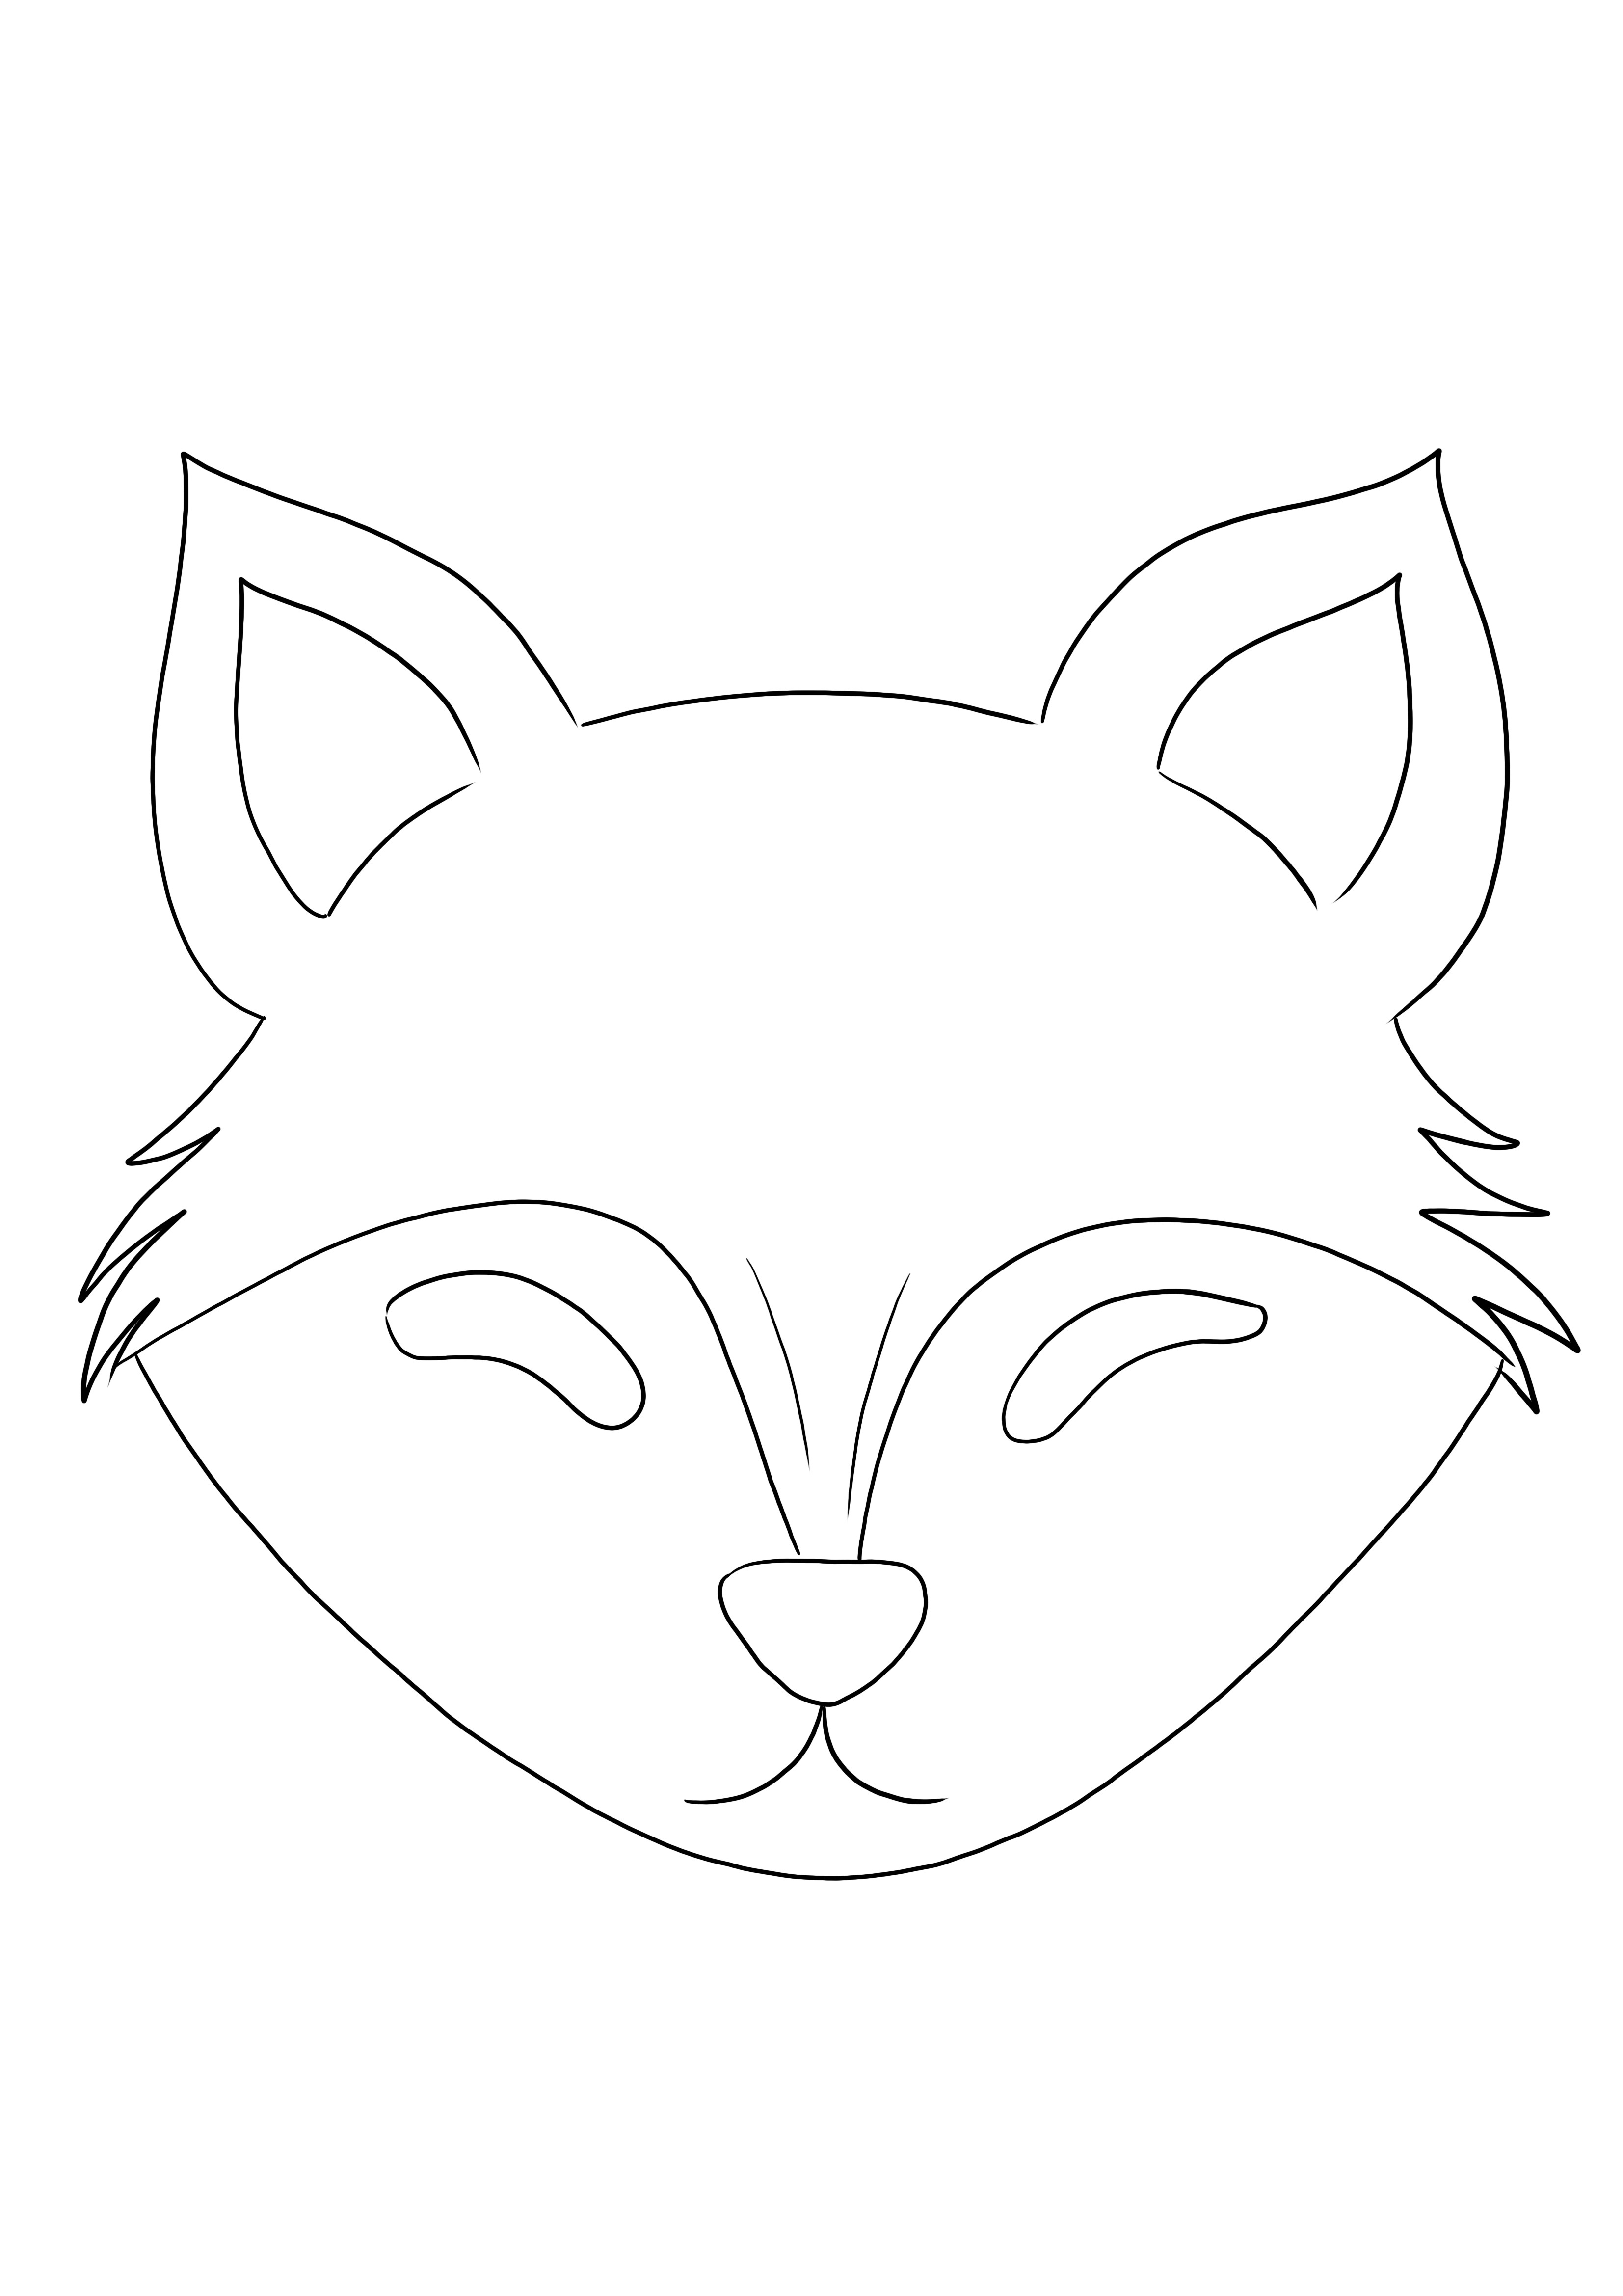 Fox Emoji coloring page or free printing or downloading